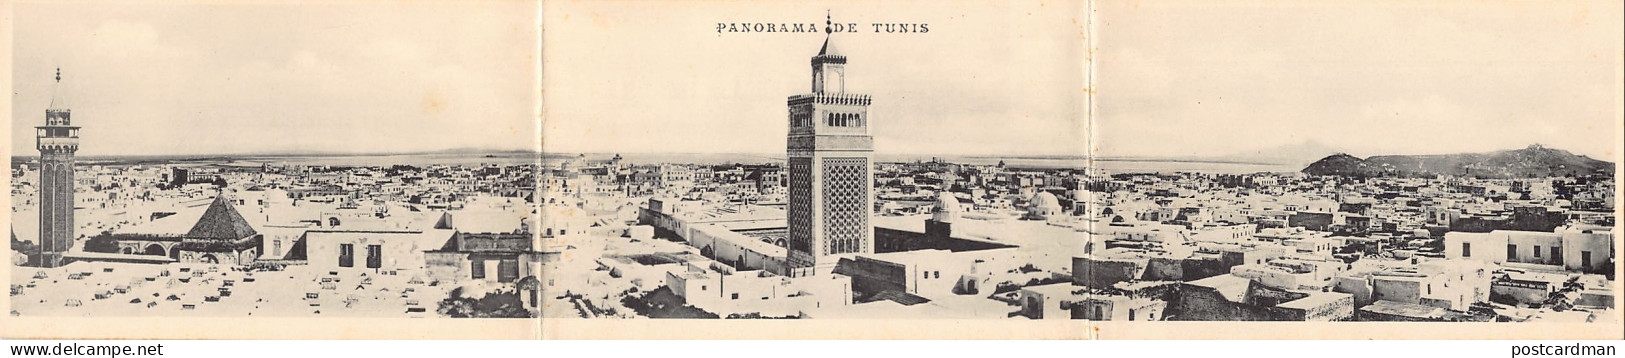 Panorama De TUNIS - Carte à 3 Volets - Ed. Inconnu  - Tunisia